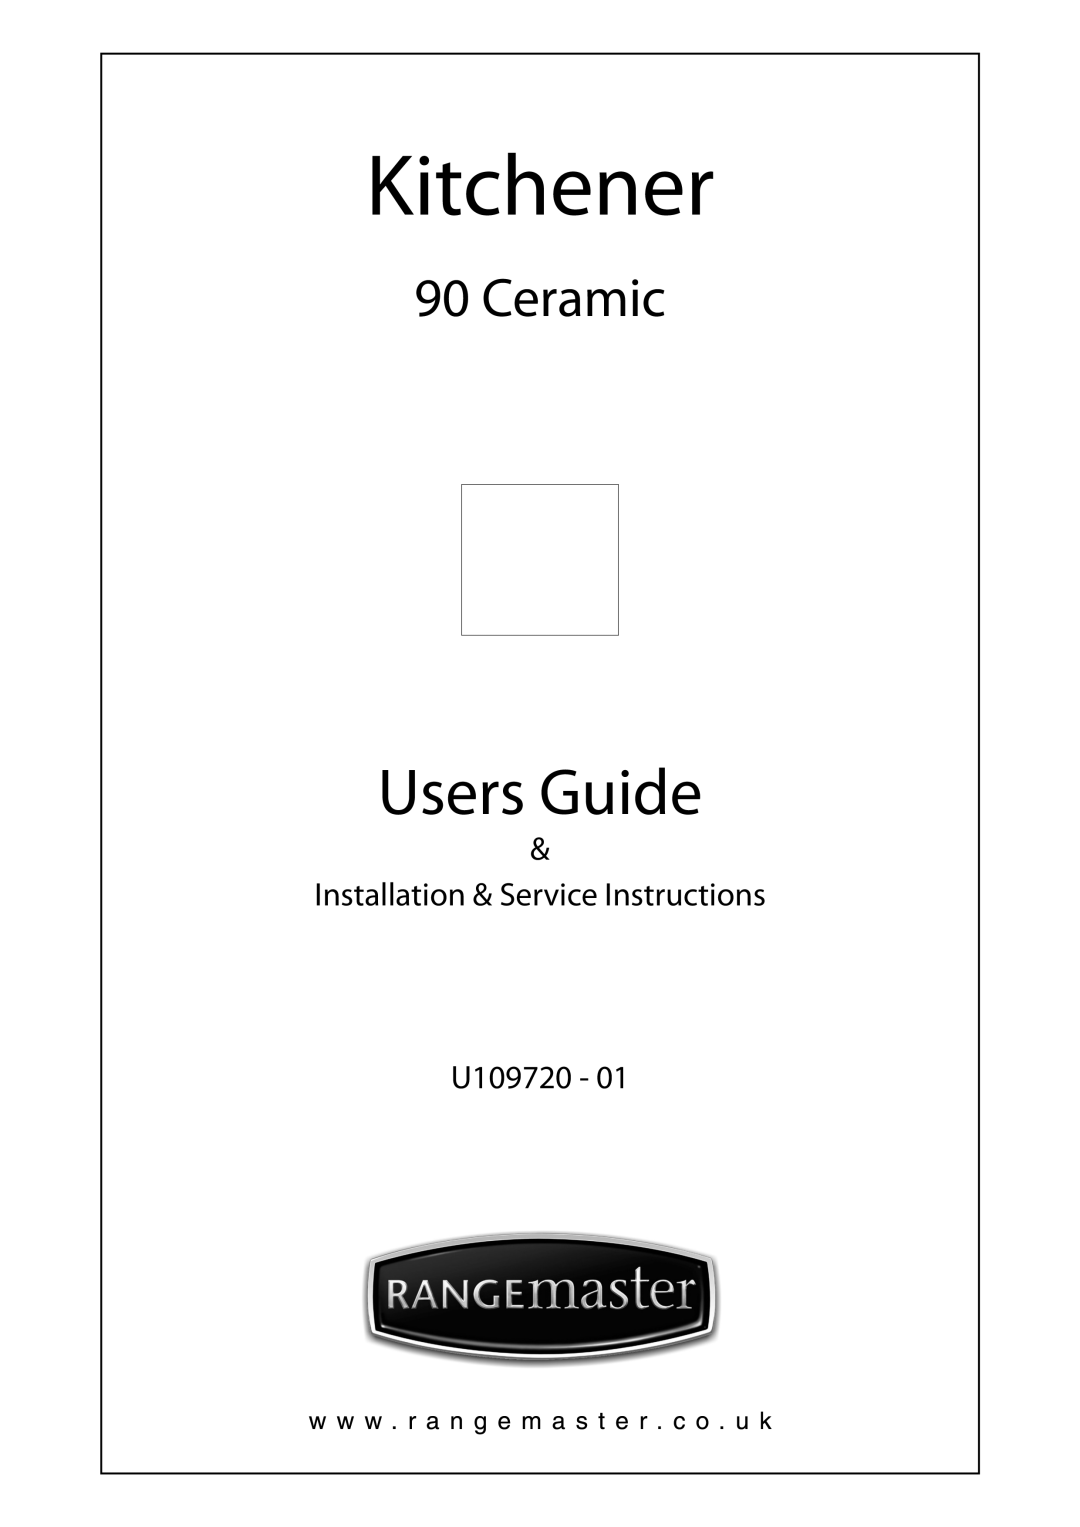 Rangemaster U109720 - 01 manual Installation & Service Instructions U109720, Kitchener, Users Guide, Ceramic 